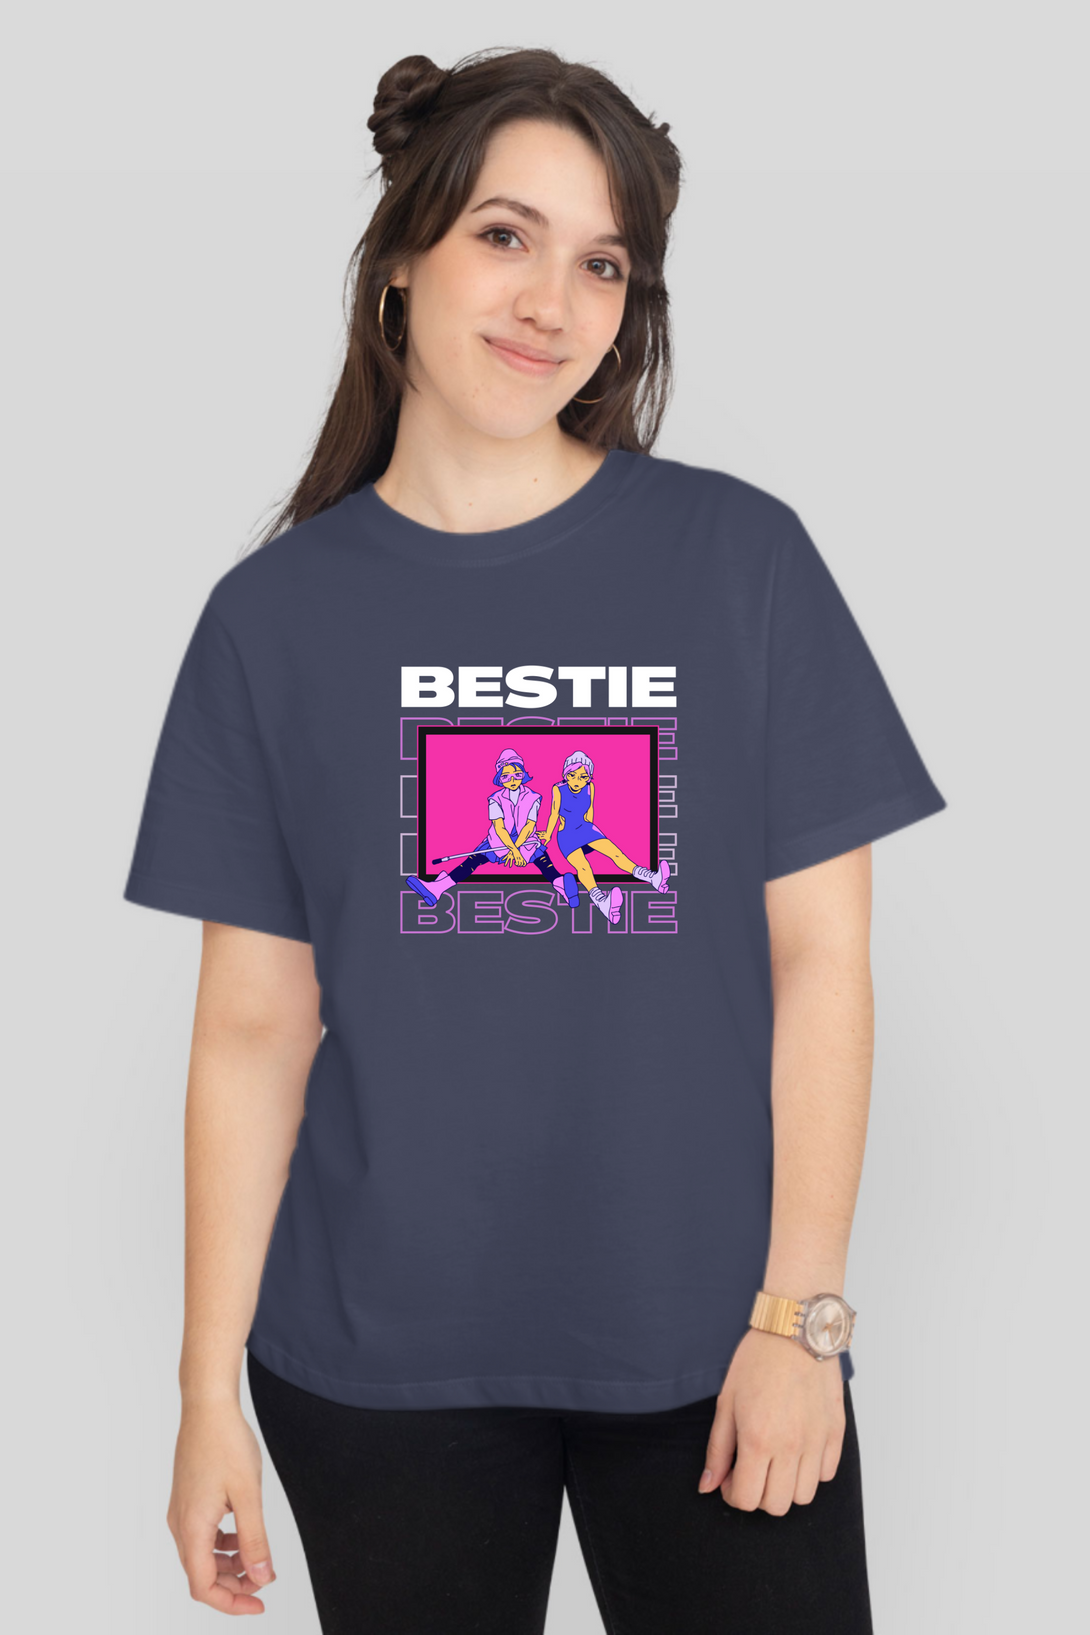 Bestie Bliss Printed T-Shirt For Women - WowWaves - 5